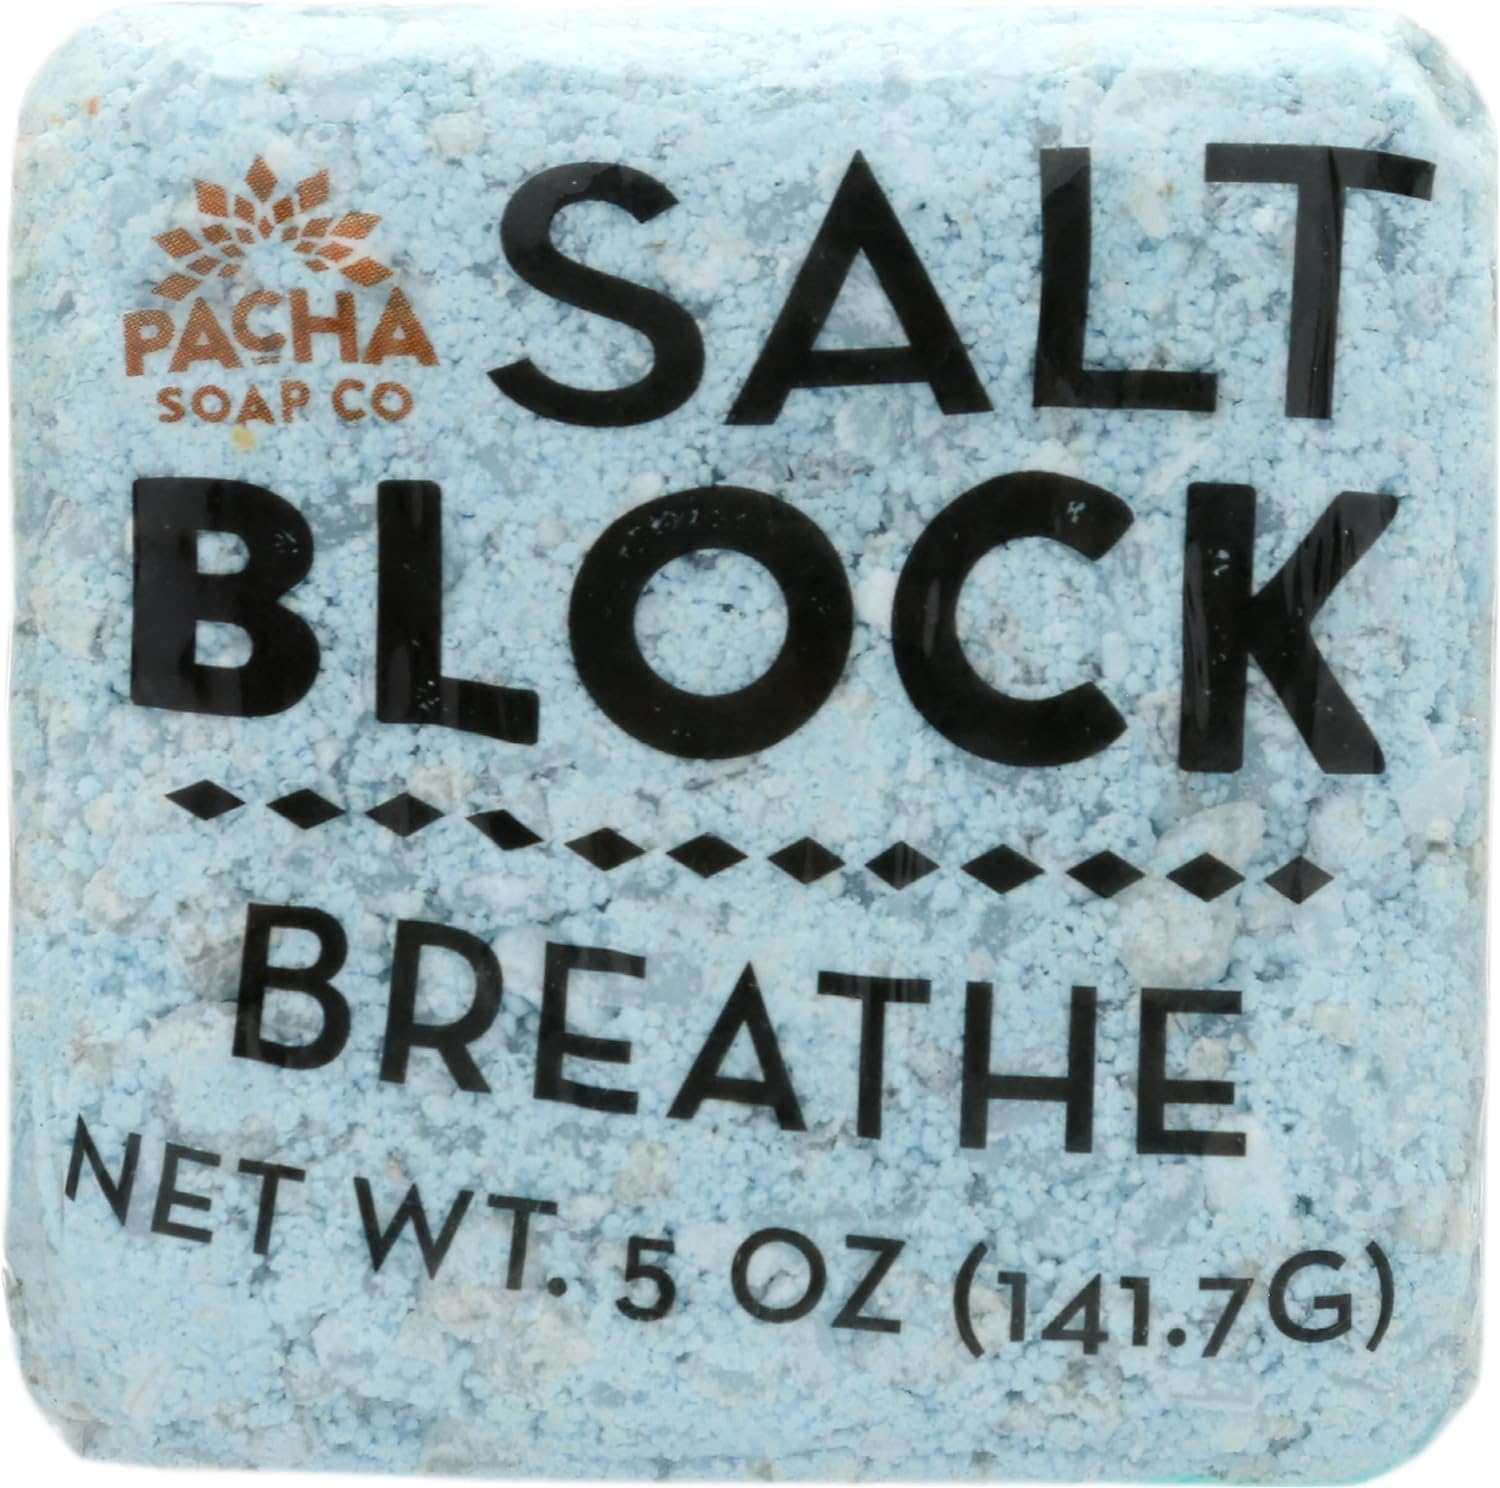 PACHA SOAP Breathe Salt Block, 5